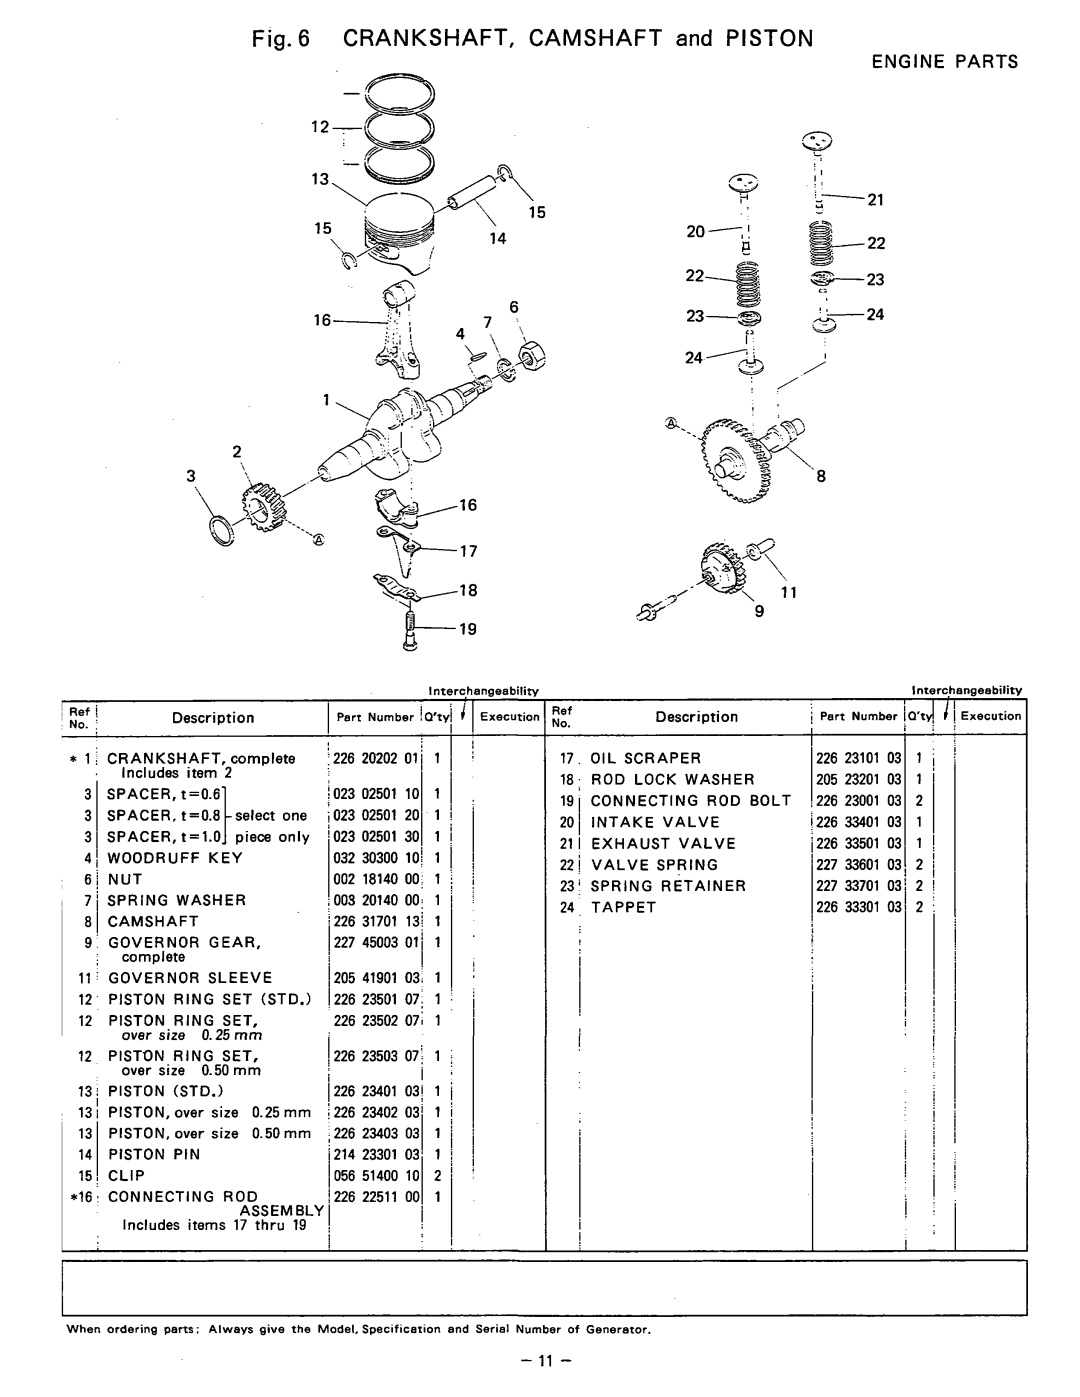 Subaru Robin Power Products R1200 manual CRANKSHAFT, CAMSHAFT and PISTON, E N G I N E, Parts, 003 